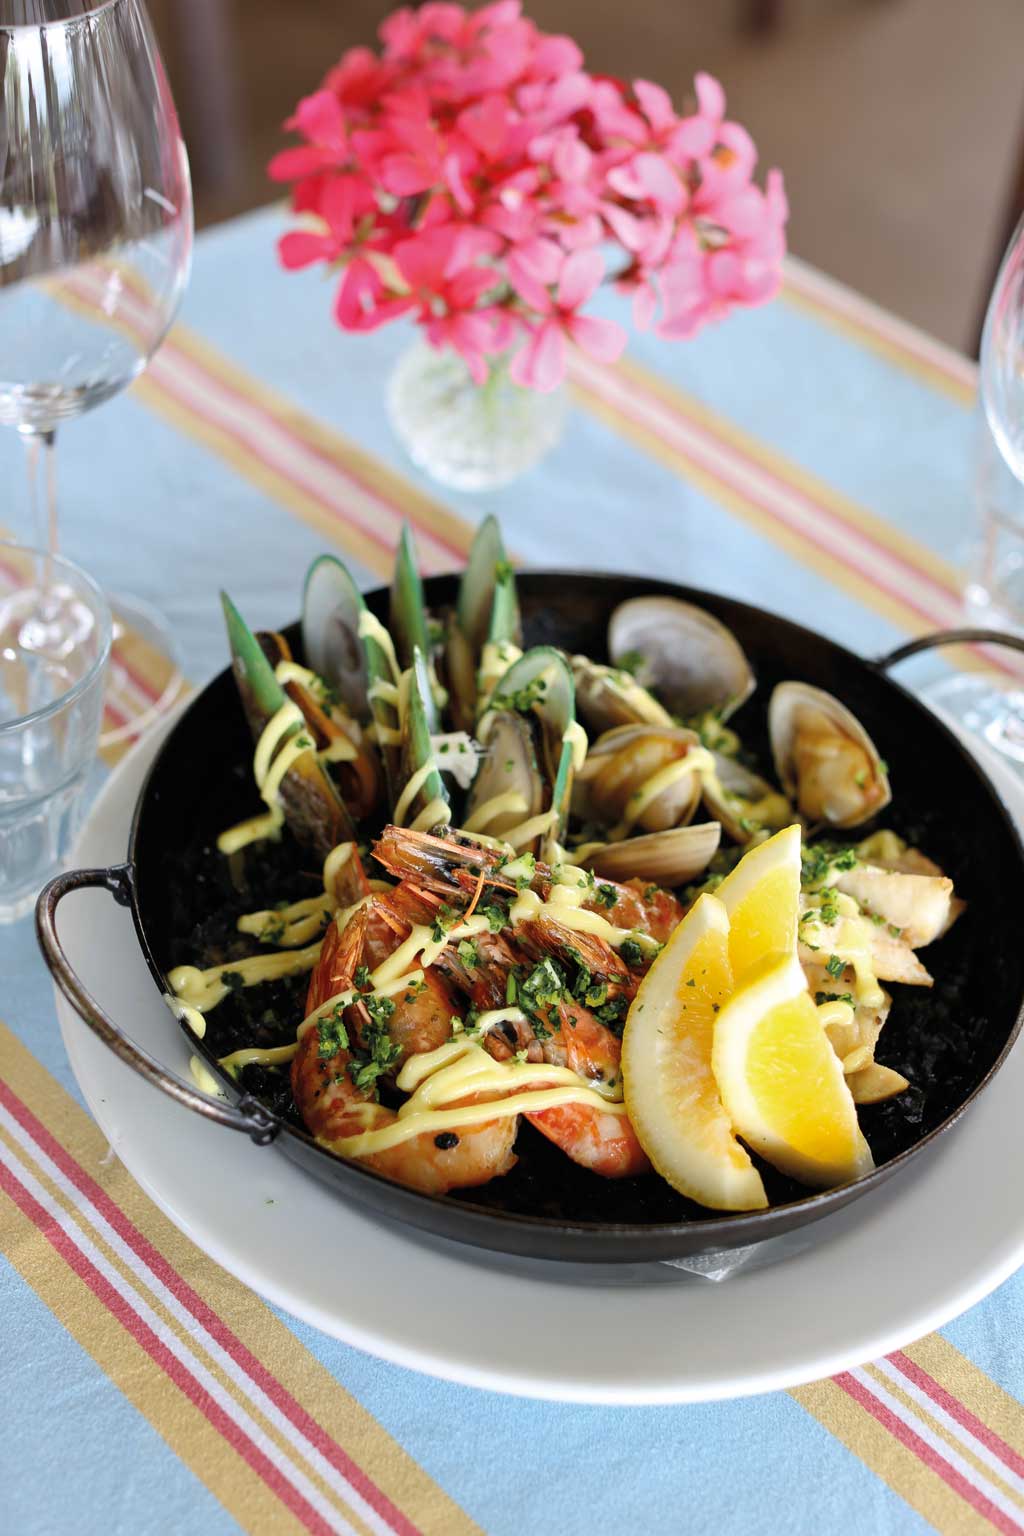 Seafood paella at Casita Miro.